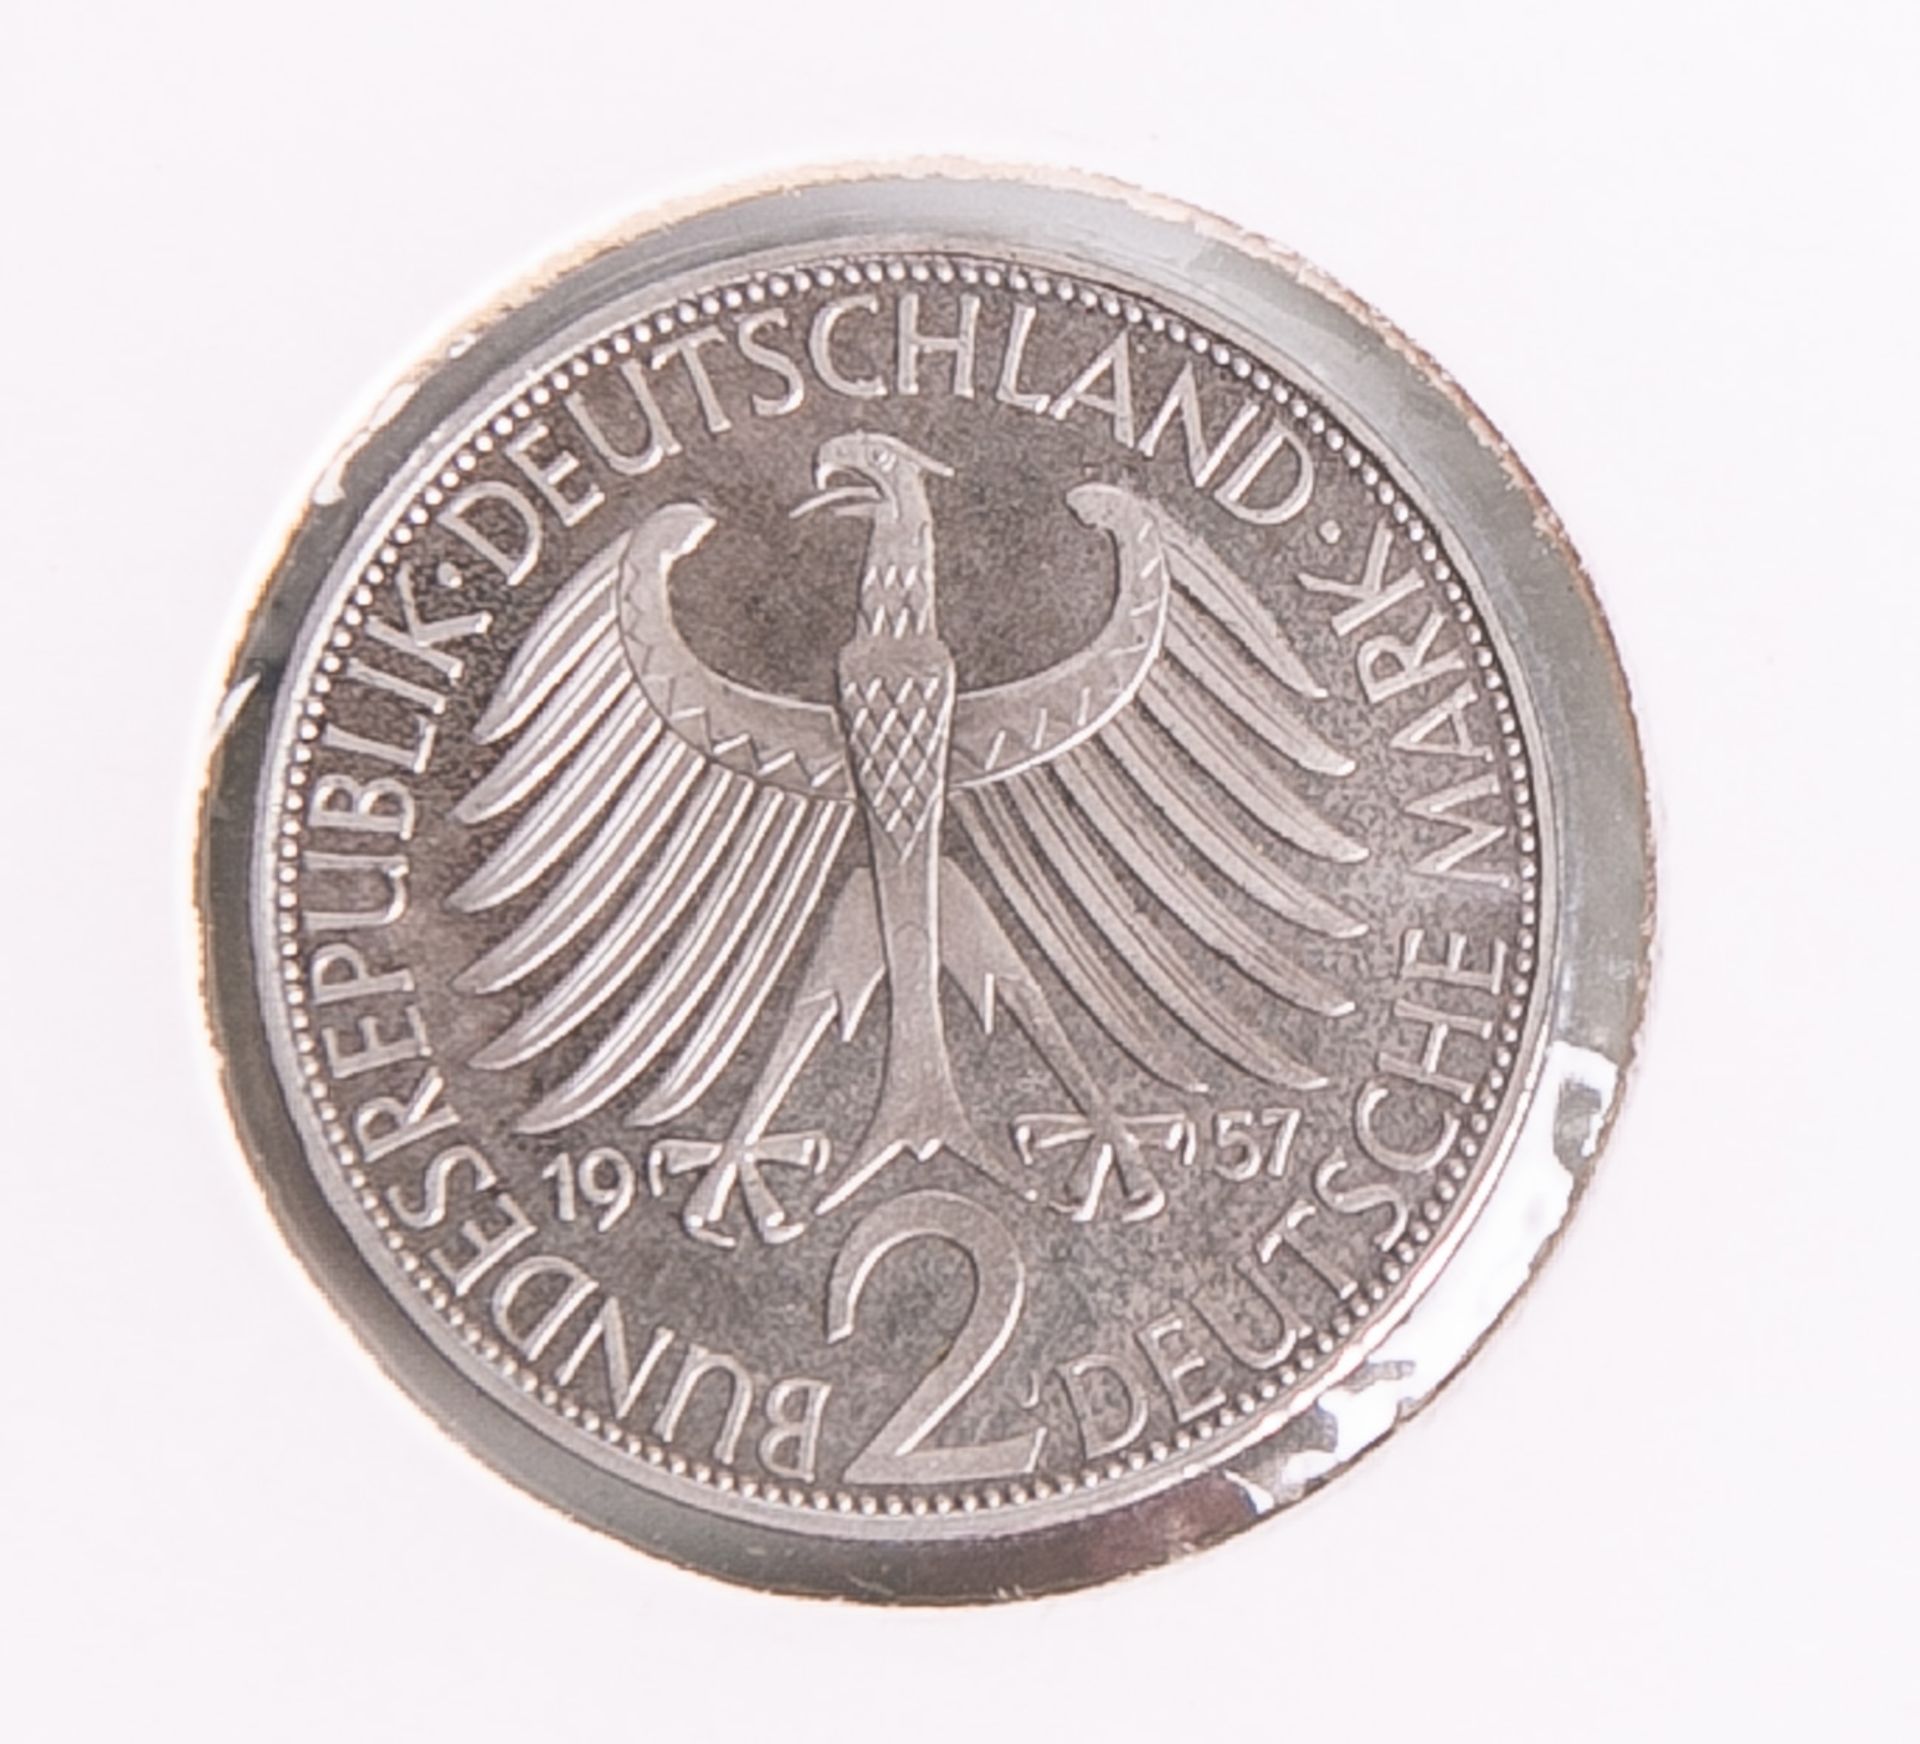 2 DM-Münze "Max Planck" (BRD, 1957), Münzprägestätte: J, Aufl. 370 Stück, eingeschweißt.